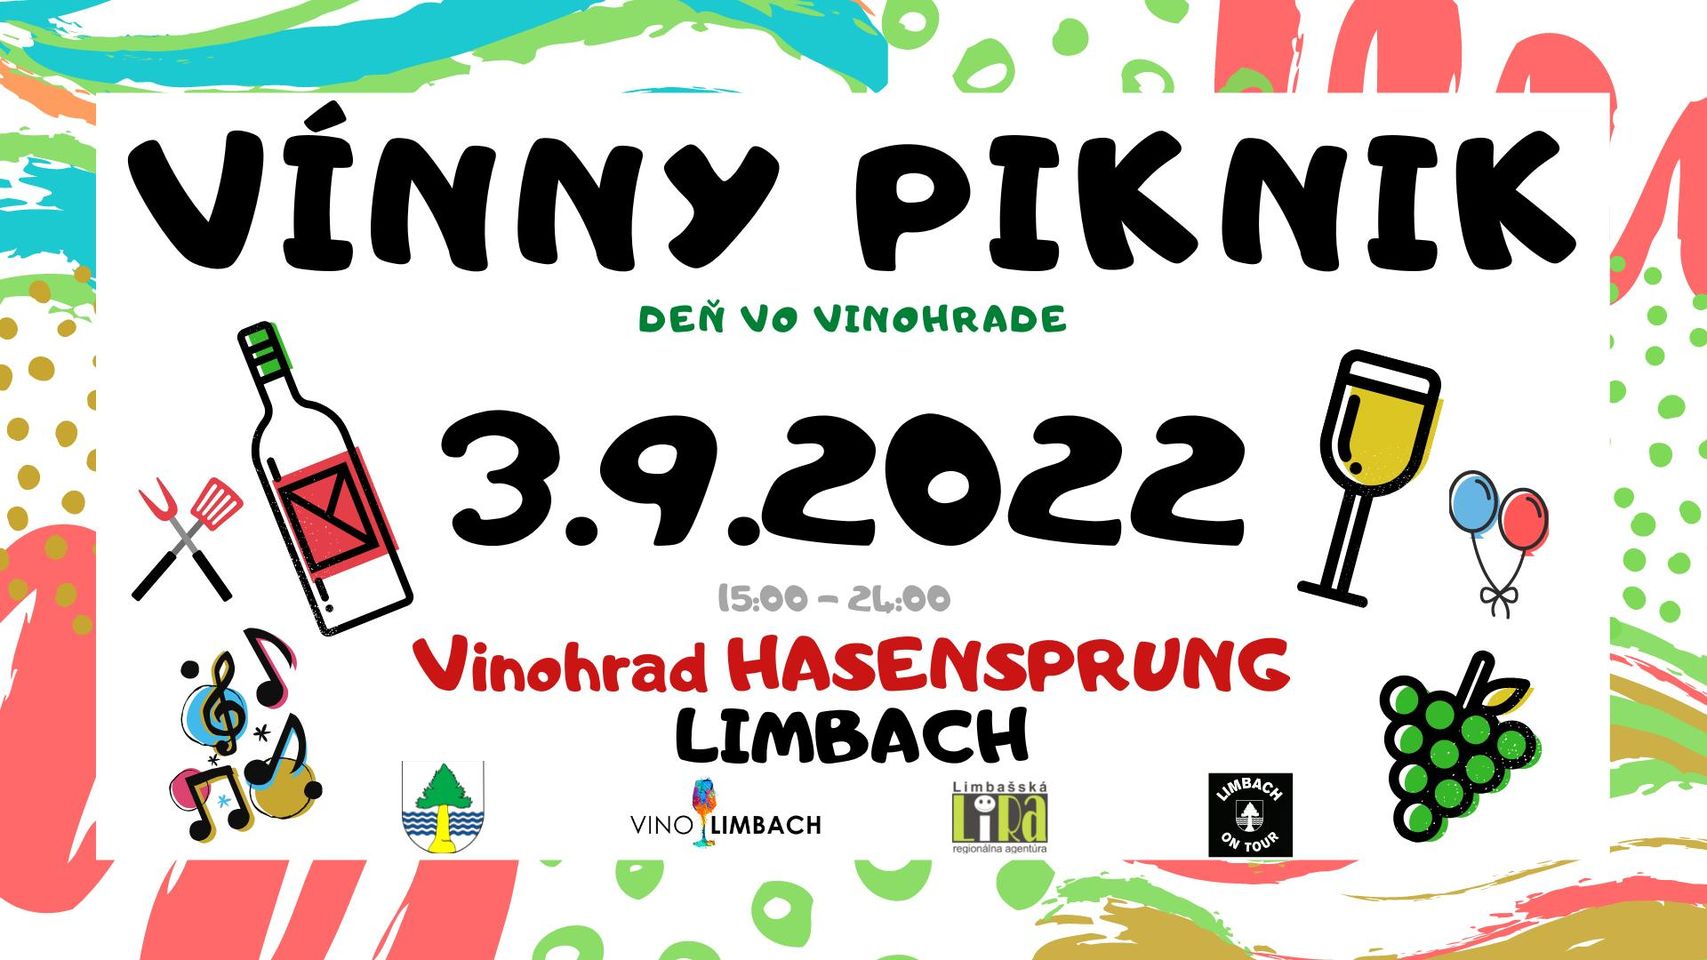 Vnny piknik Limbach 2022 - de vo vinohrade